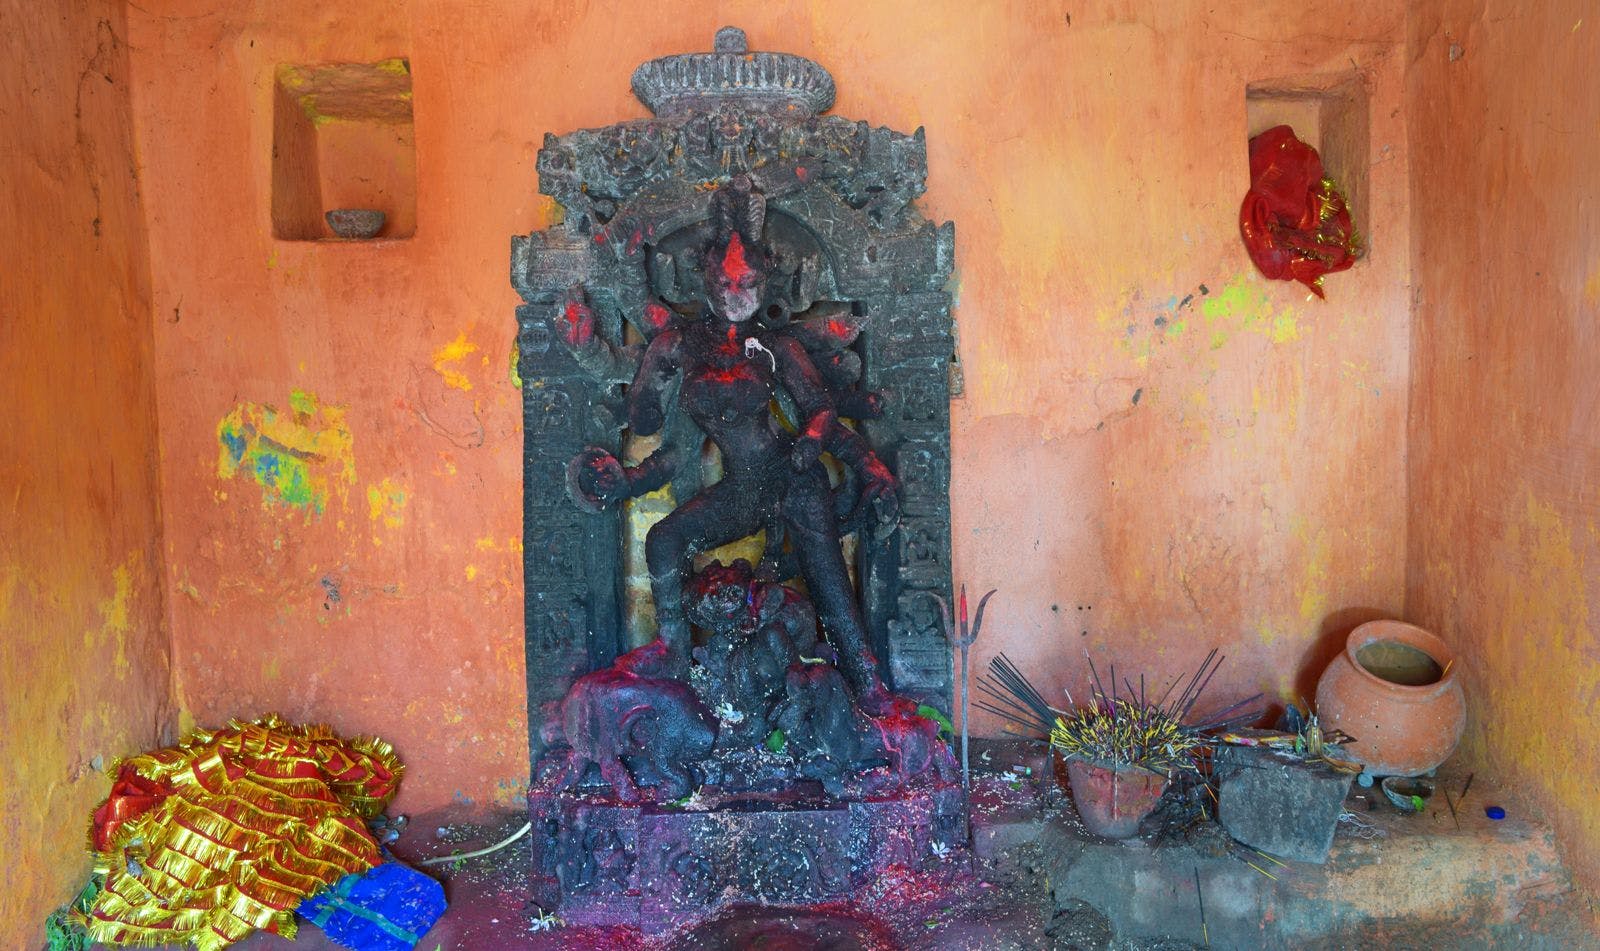 Idol of Eight-armed Durga